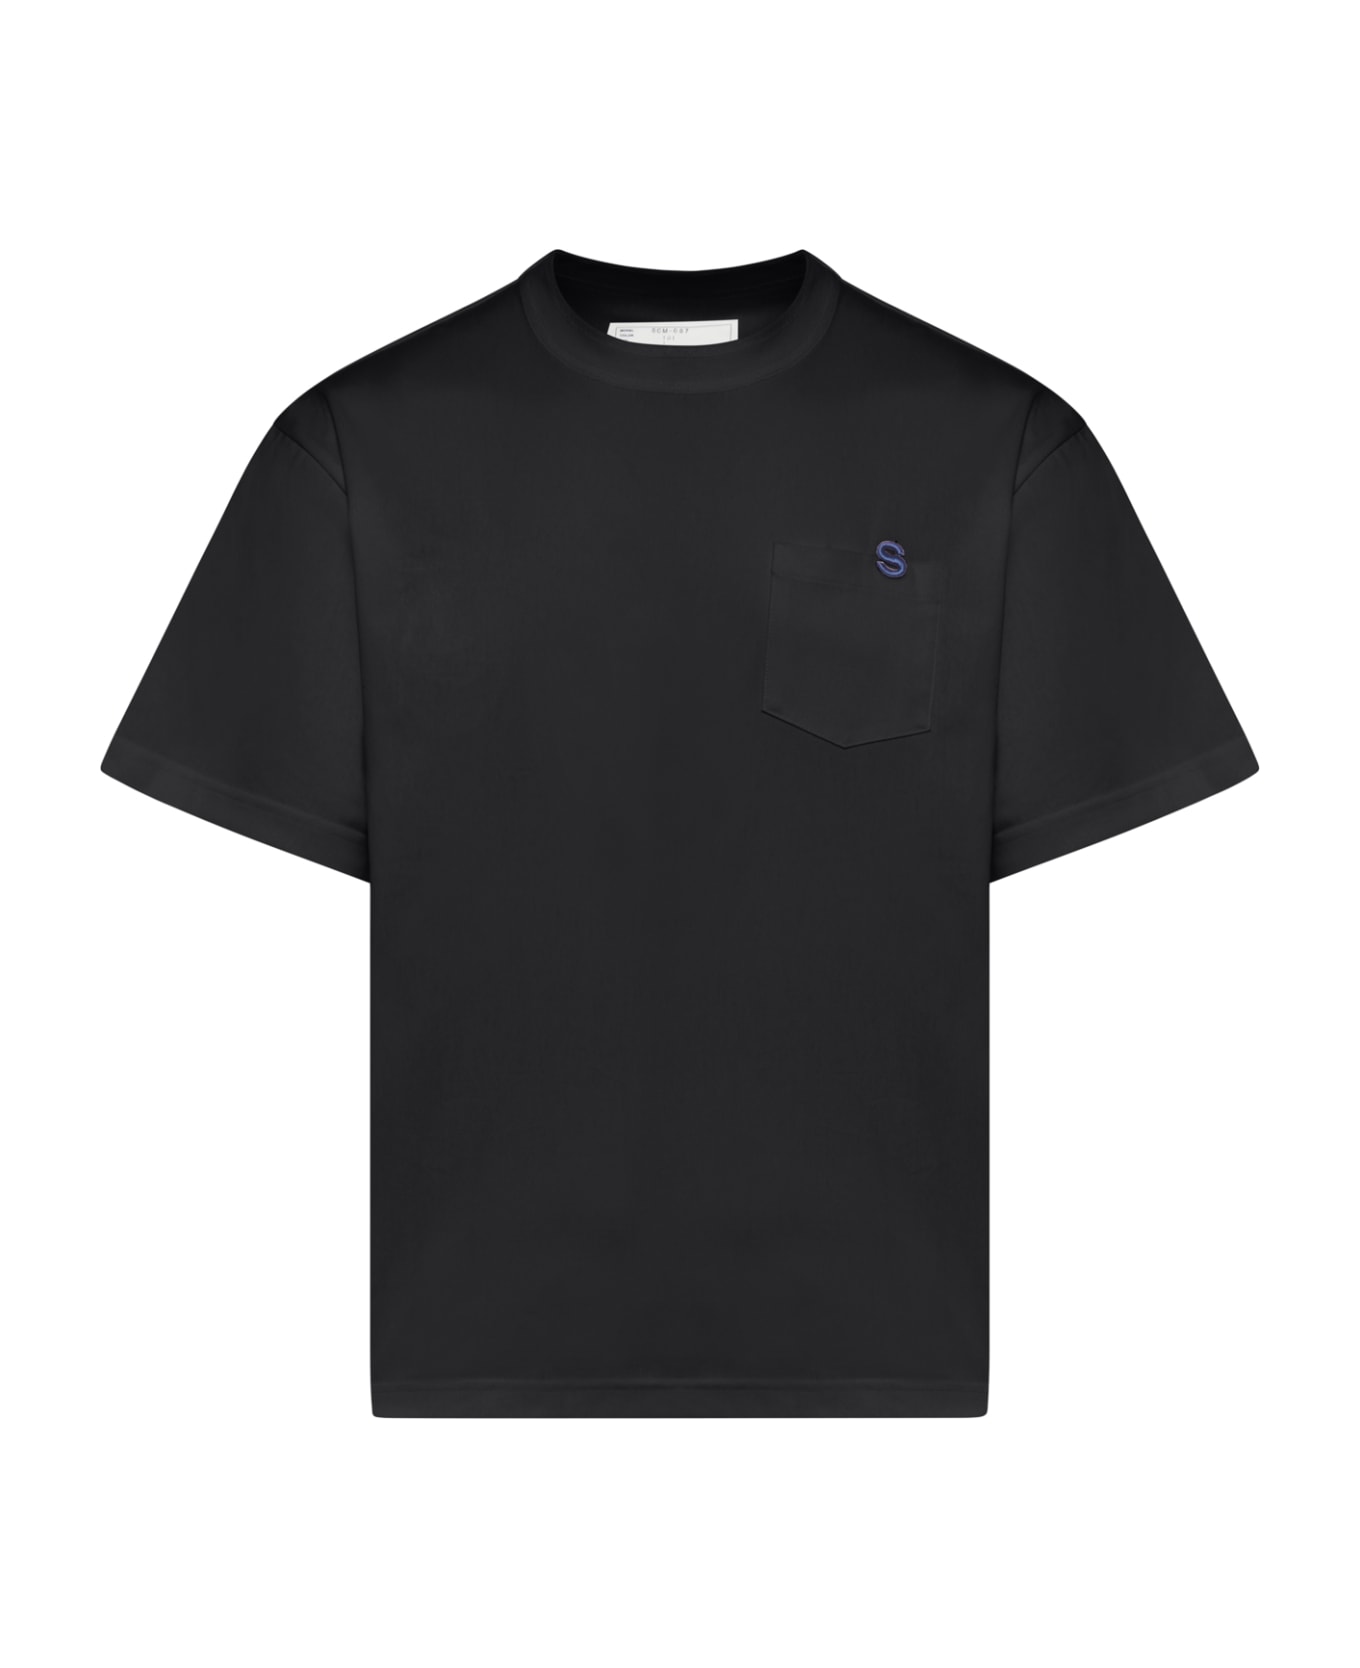 Sacai S Cotton Jersey T-shirt - Black